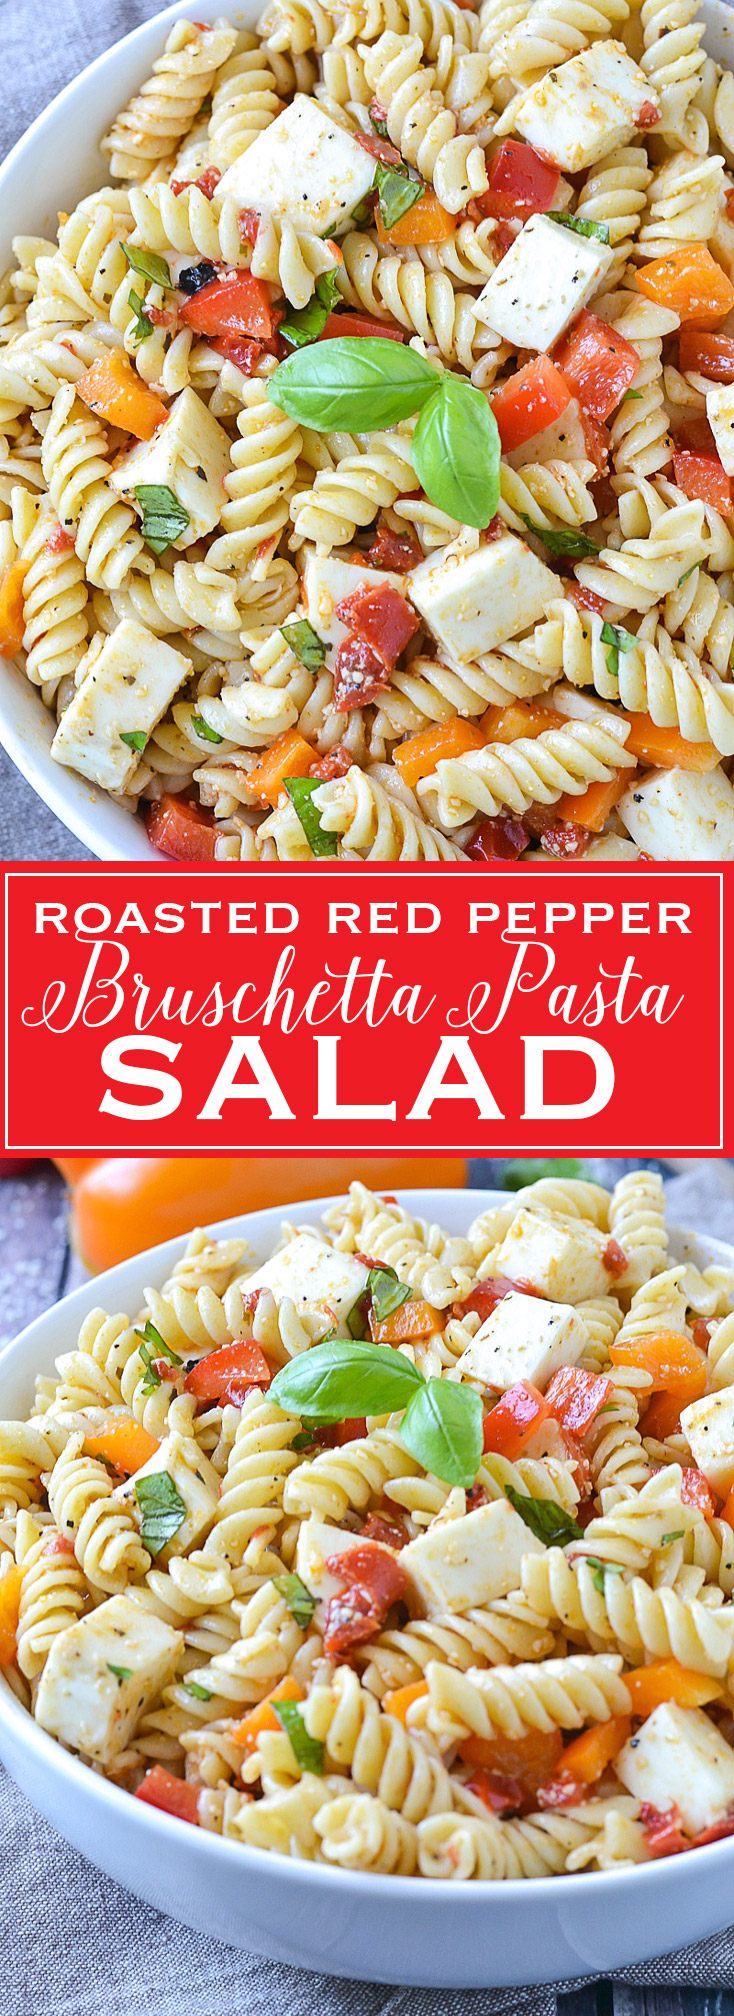 Roasted Red Pepper Bruschetta Pasta Salad | www.motherthyme.com